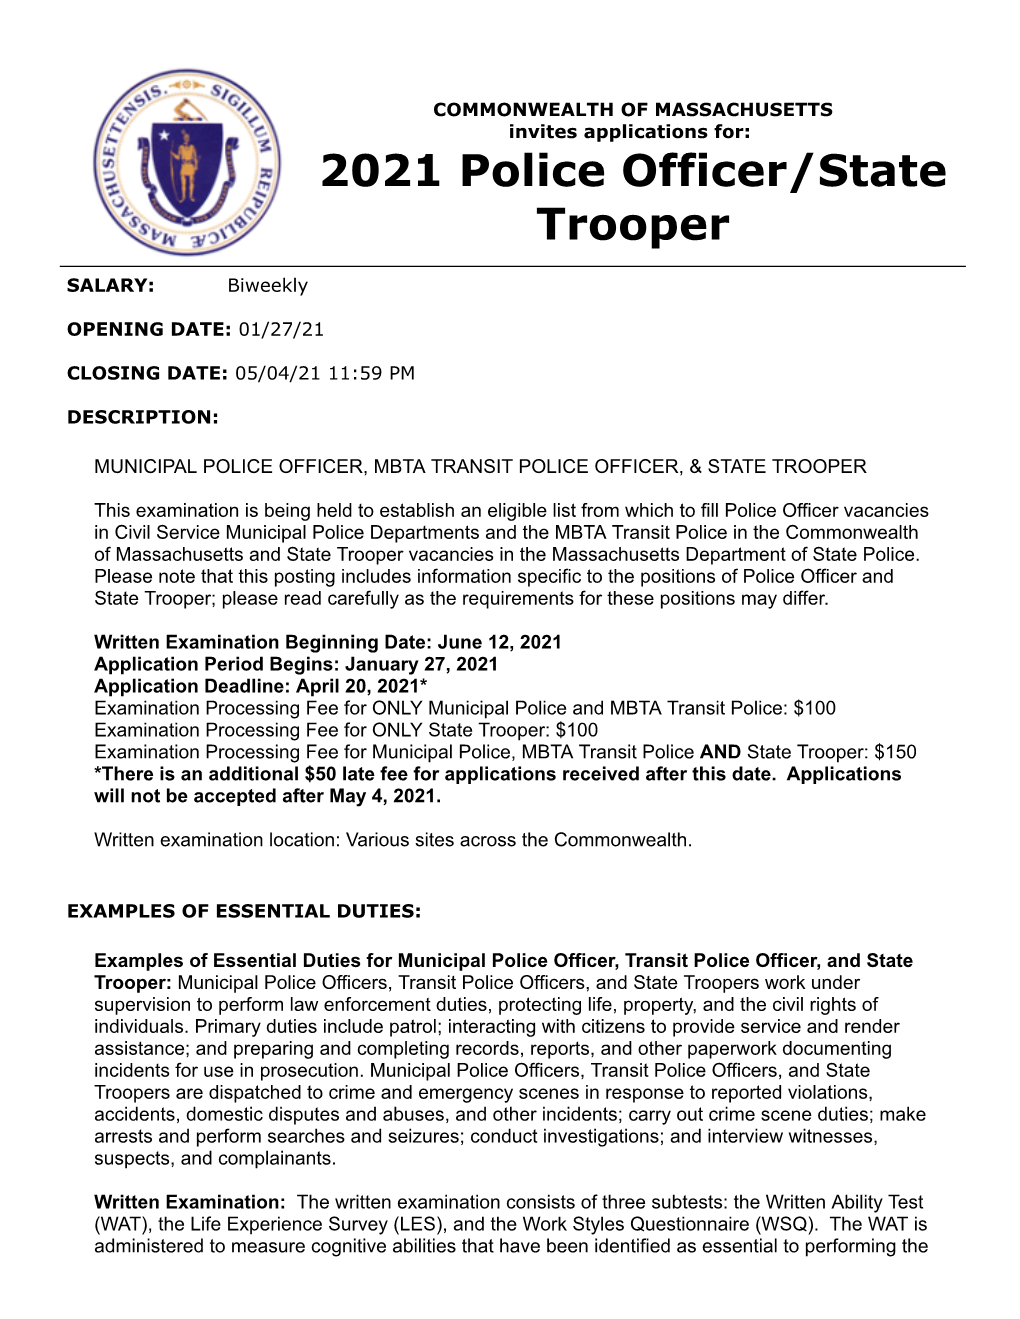 2021 Police Officer/State Trooper